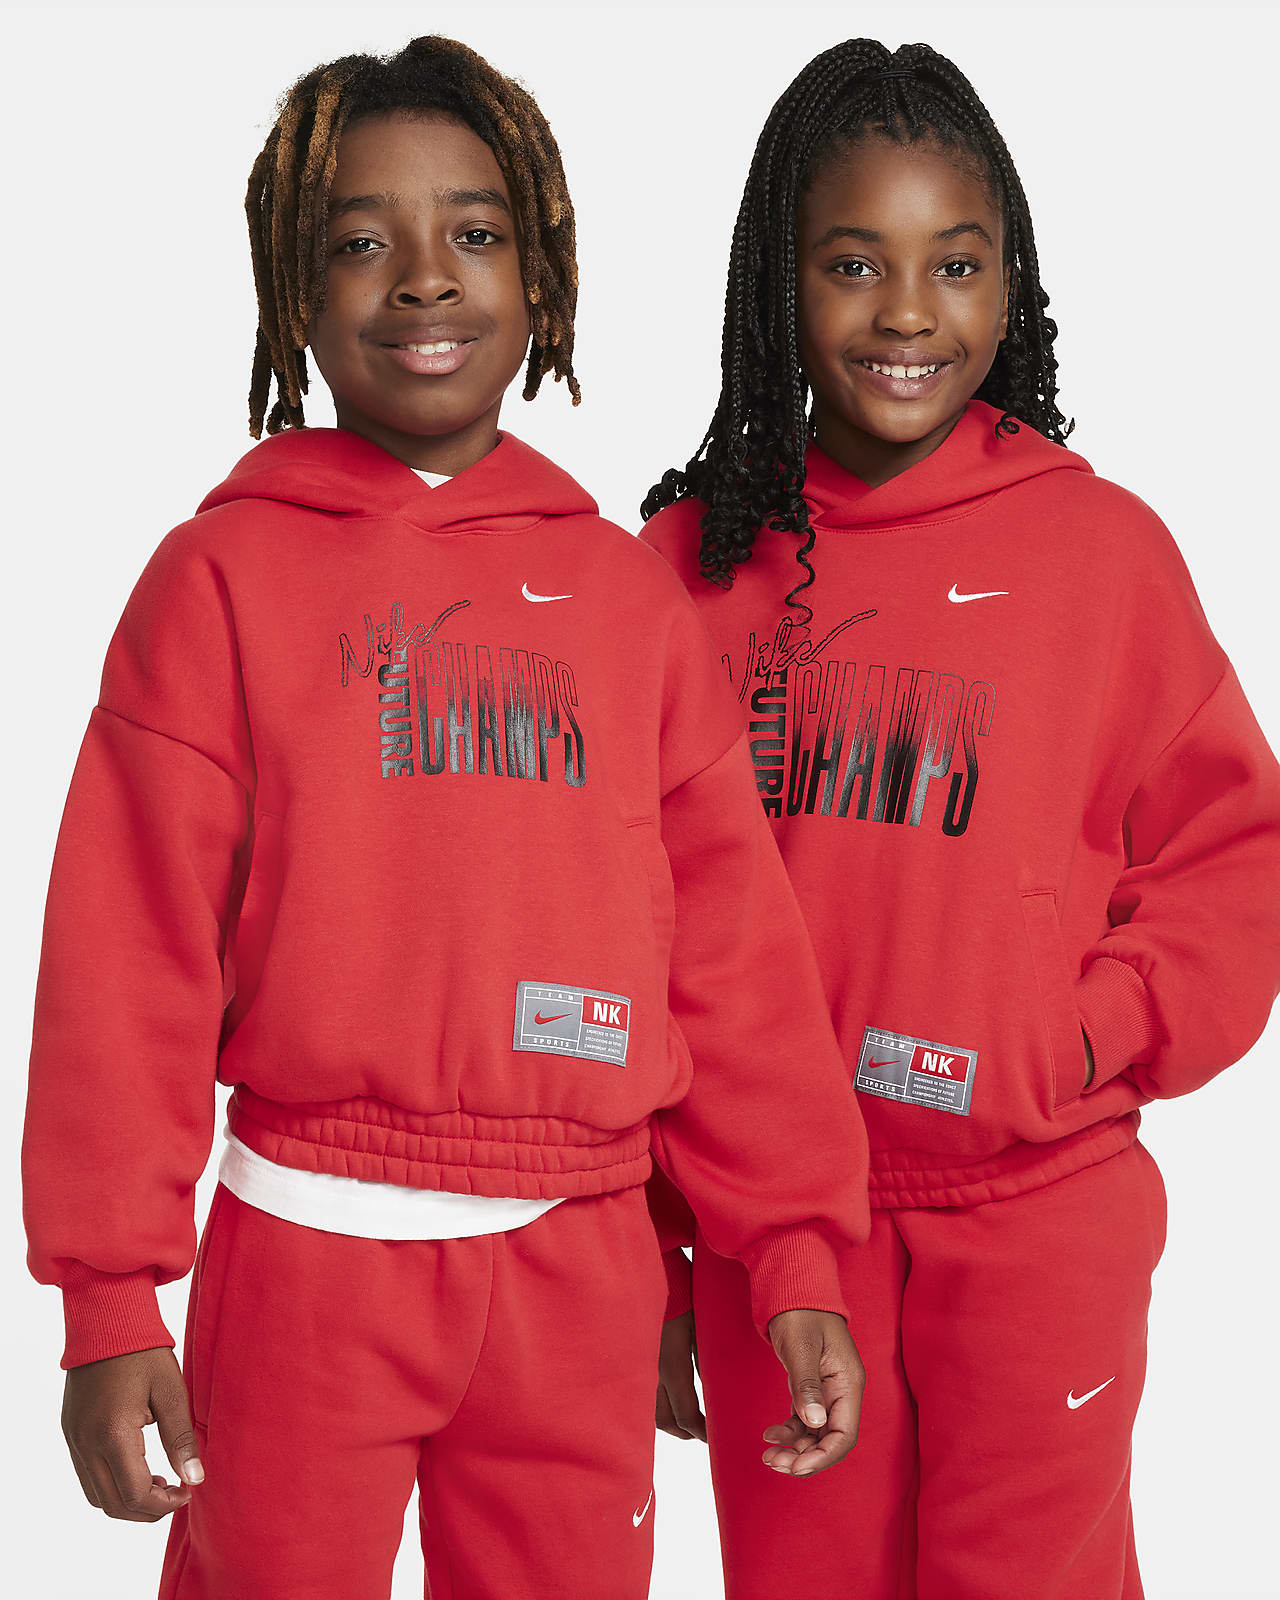 Nike Culture of Basketball Big Kids' Pullover Fleece Hoodie